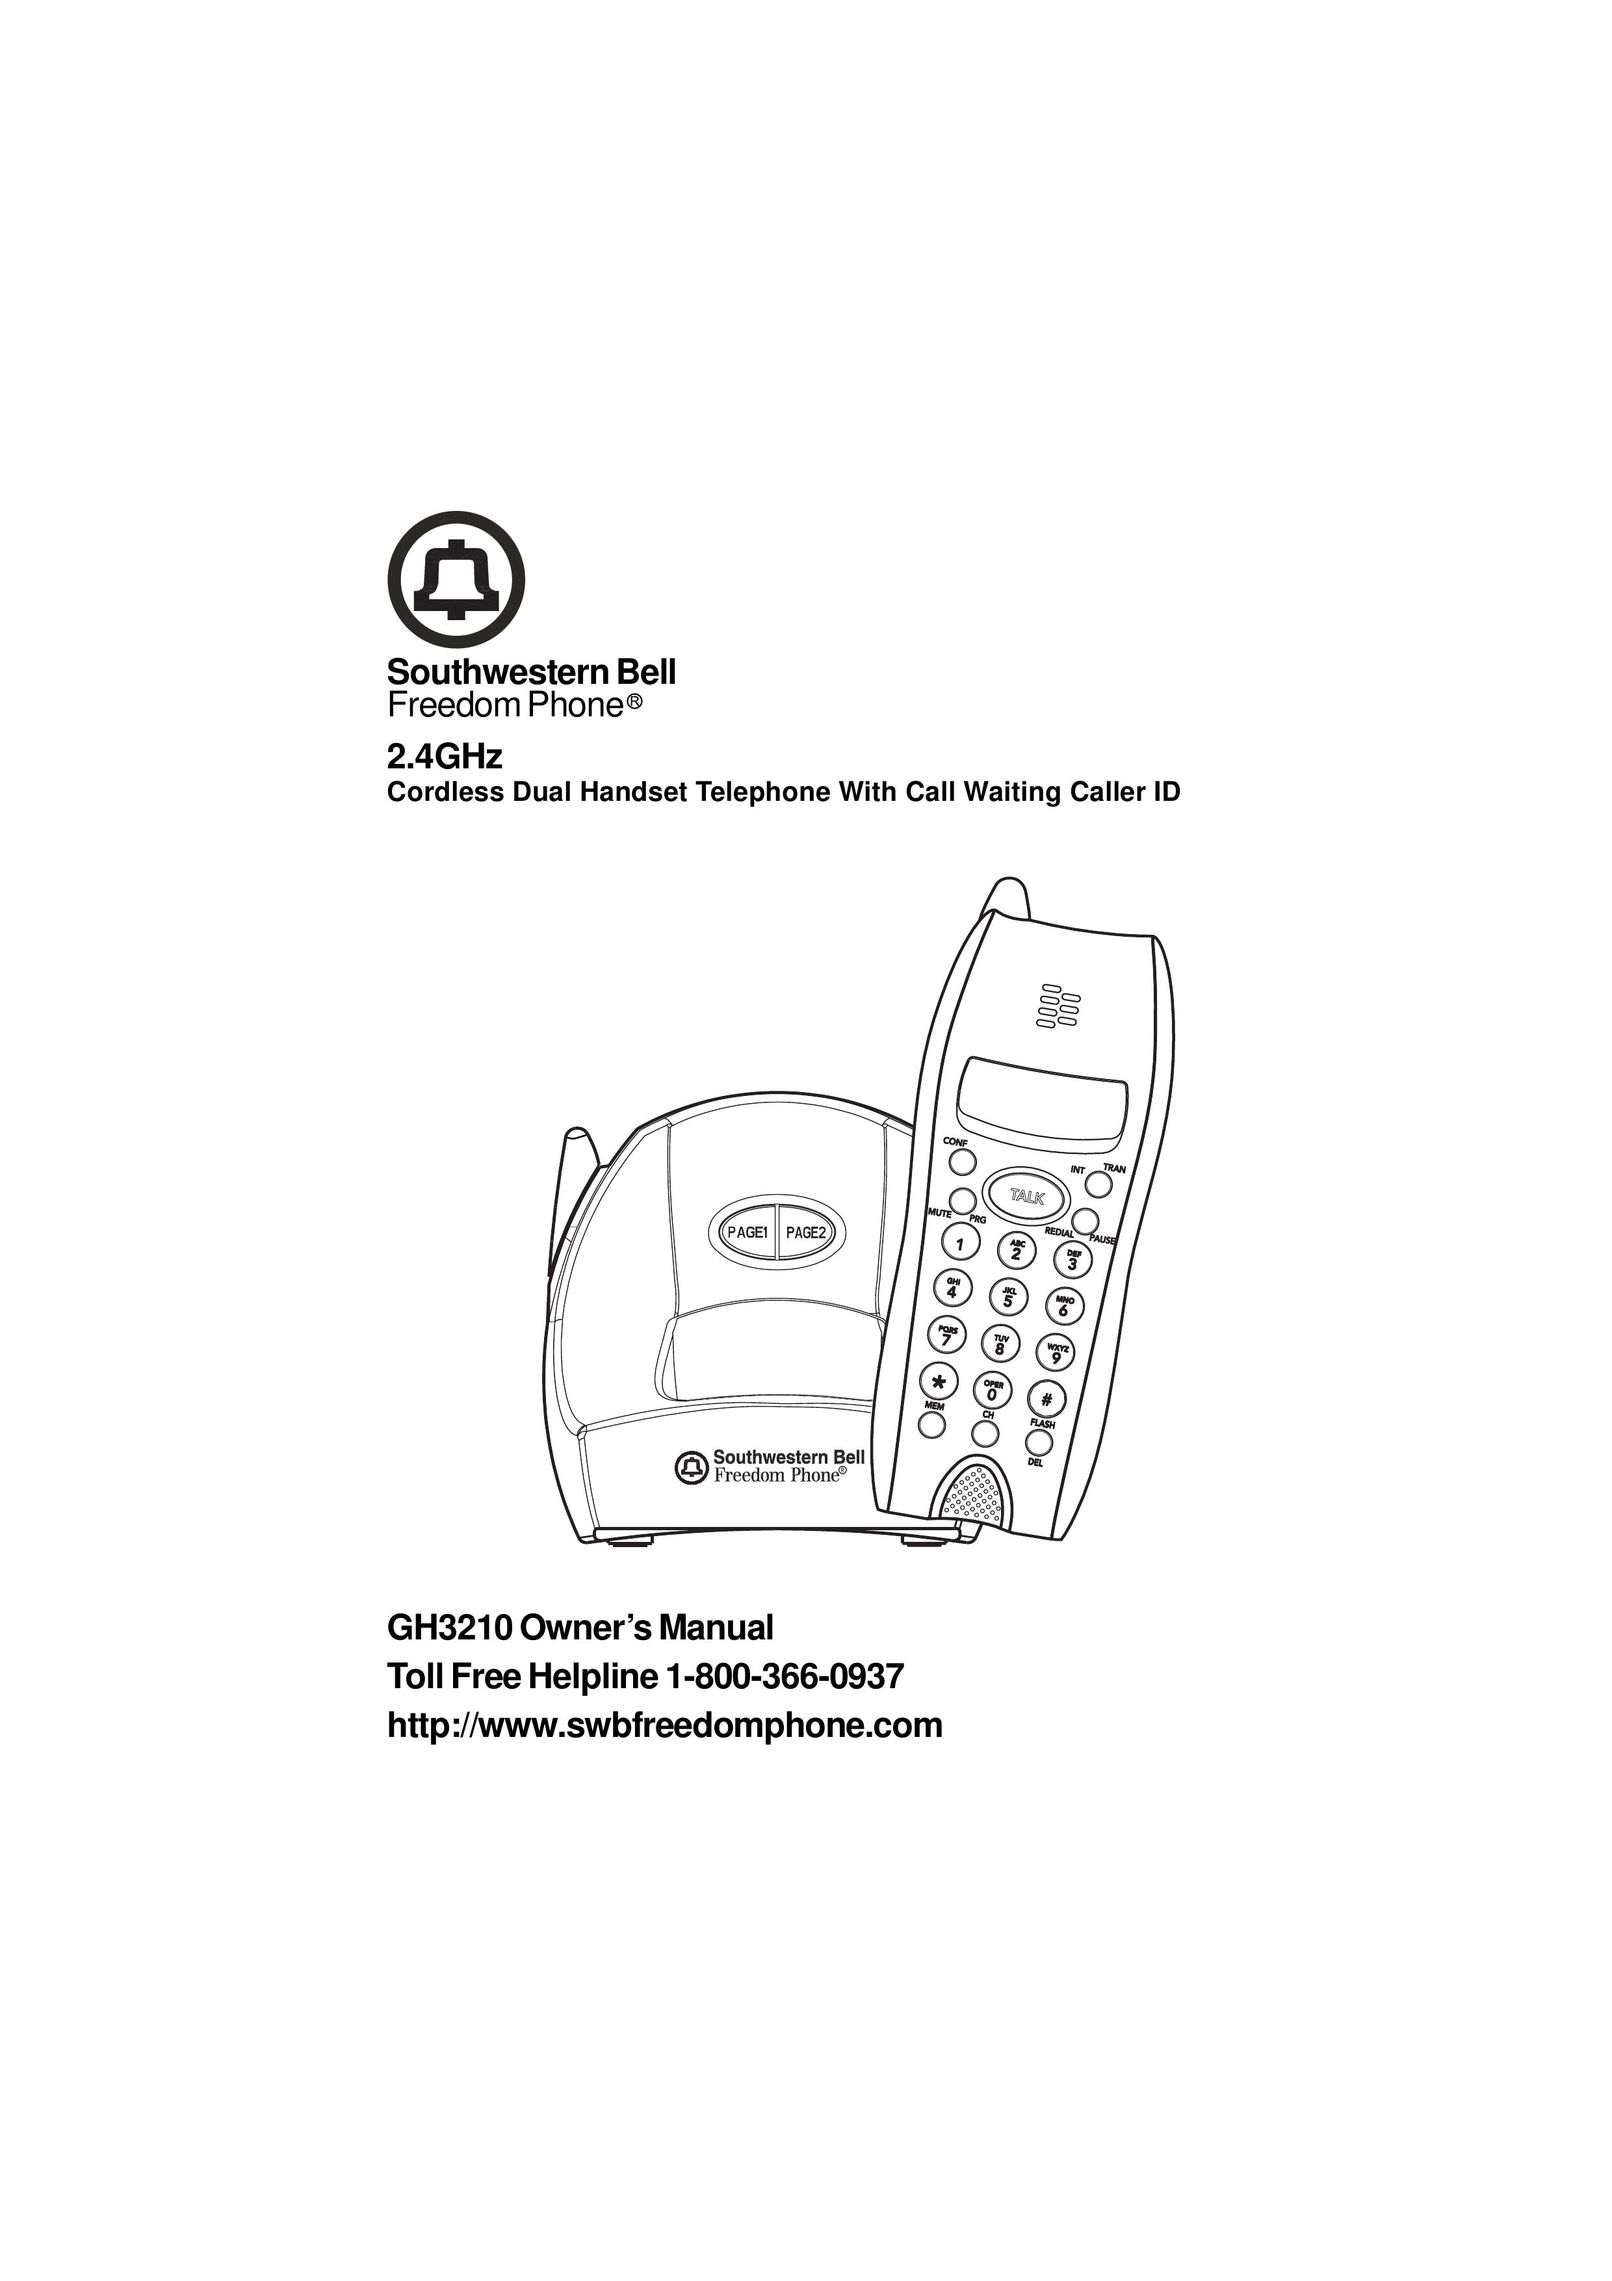 Southwestern Bell GH3210 Cordless Telephone User Manual